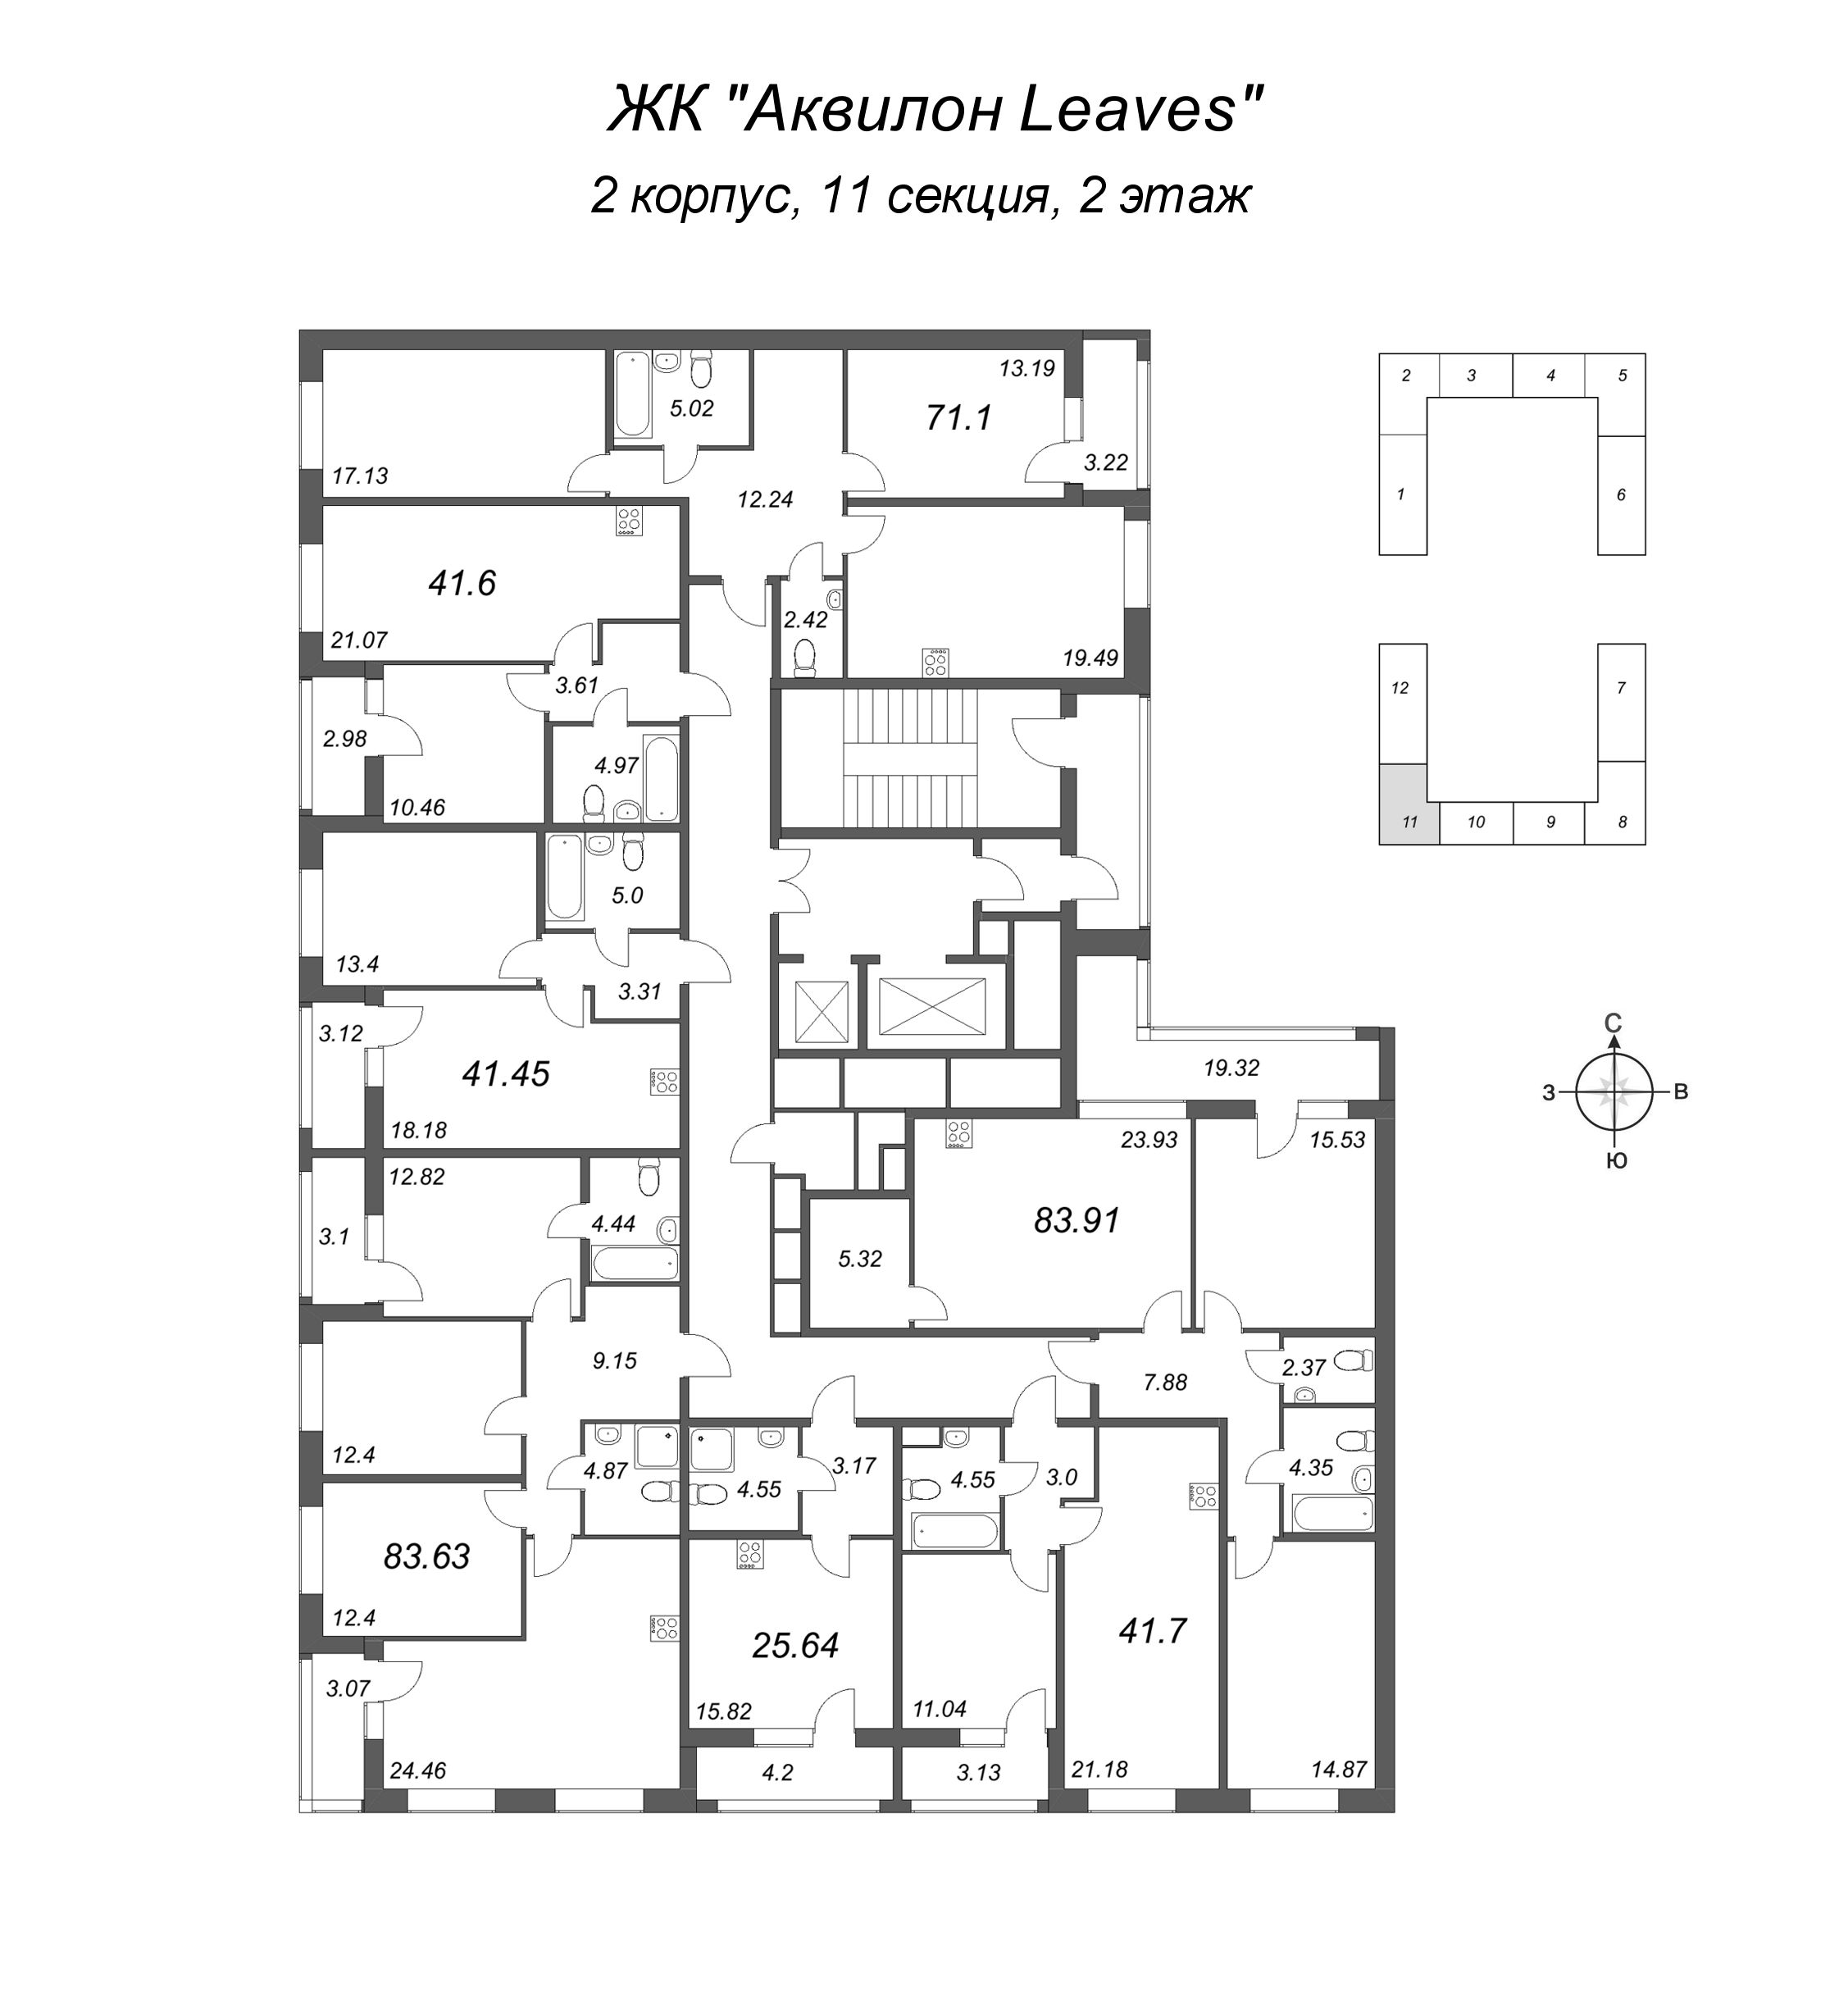 2-комнатная (Евро) квартира, 41.45 м² - планировка этажа